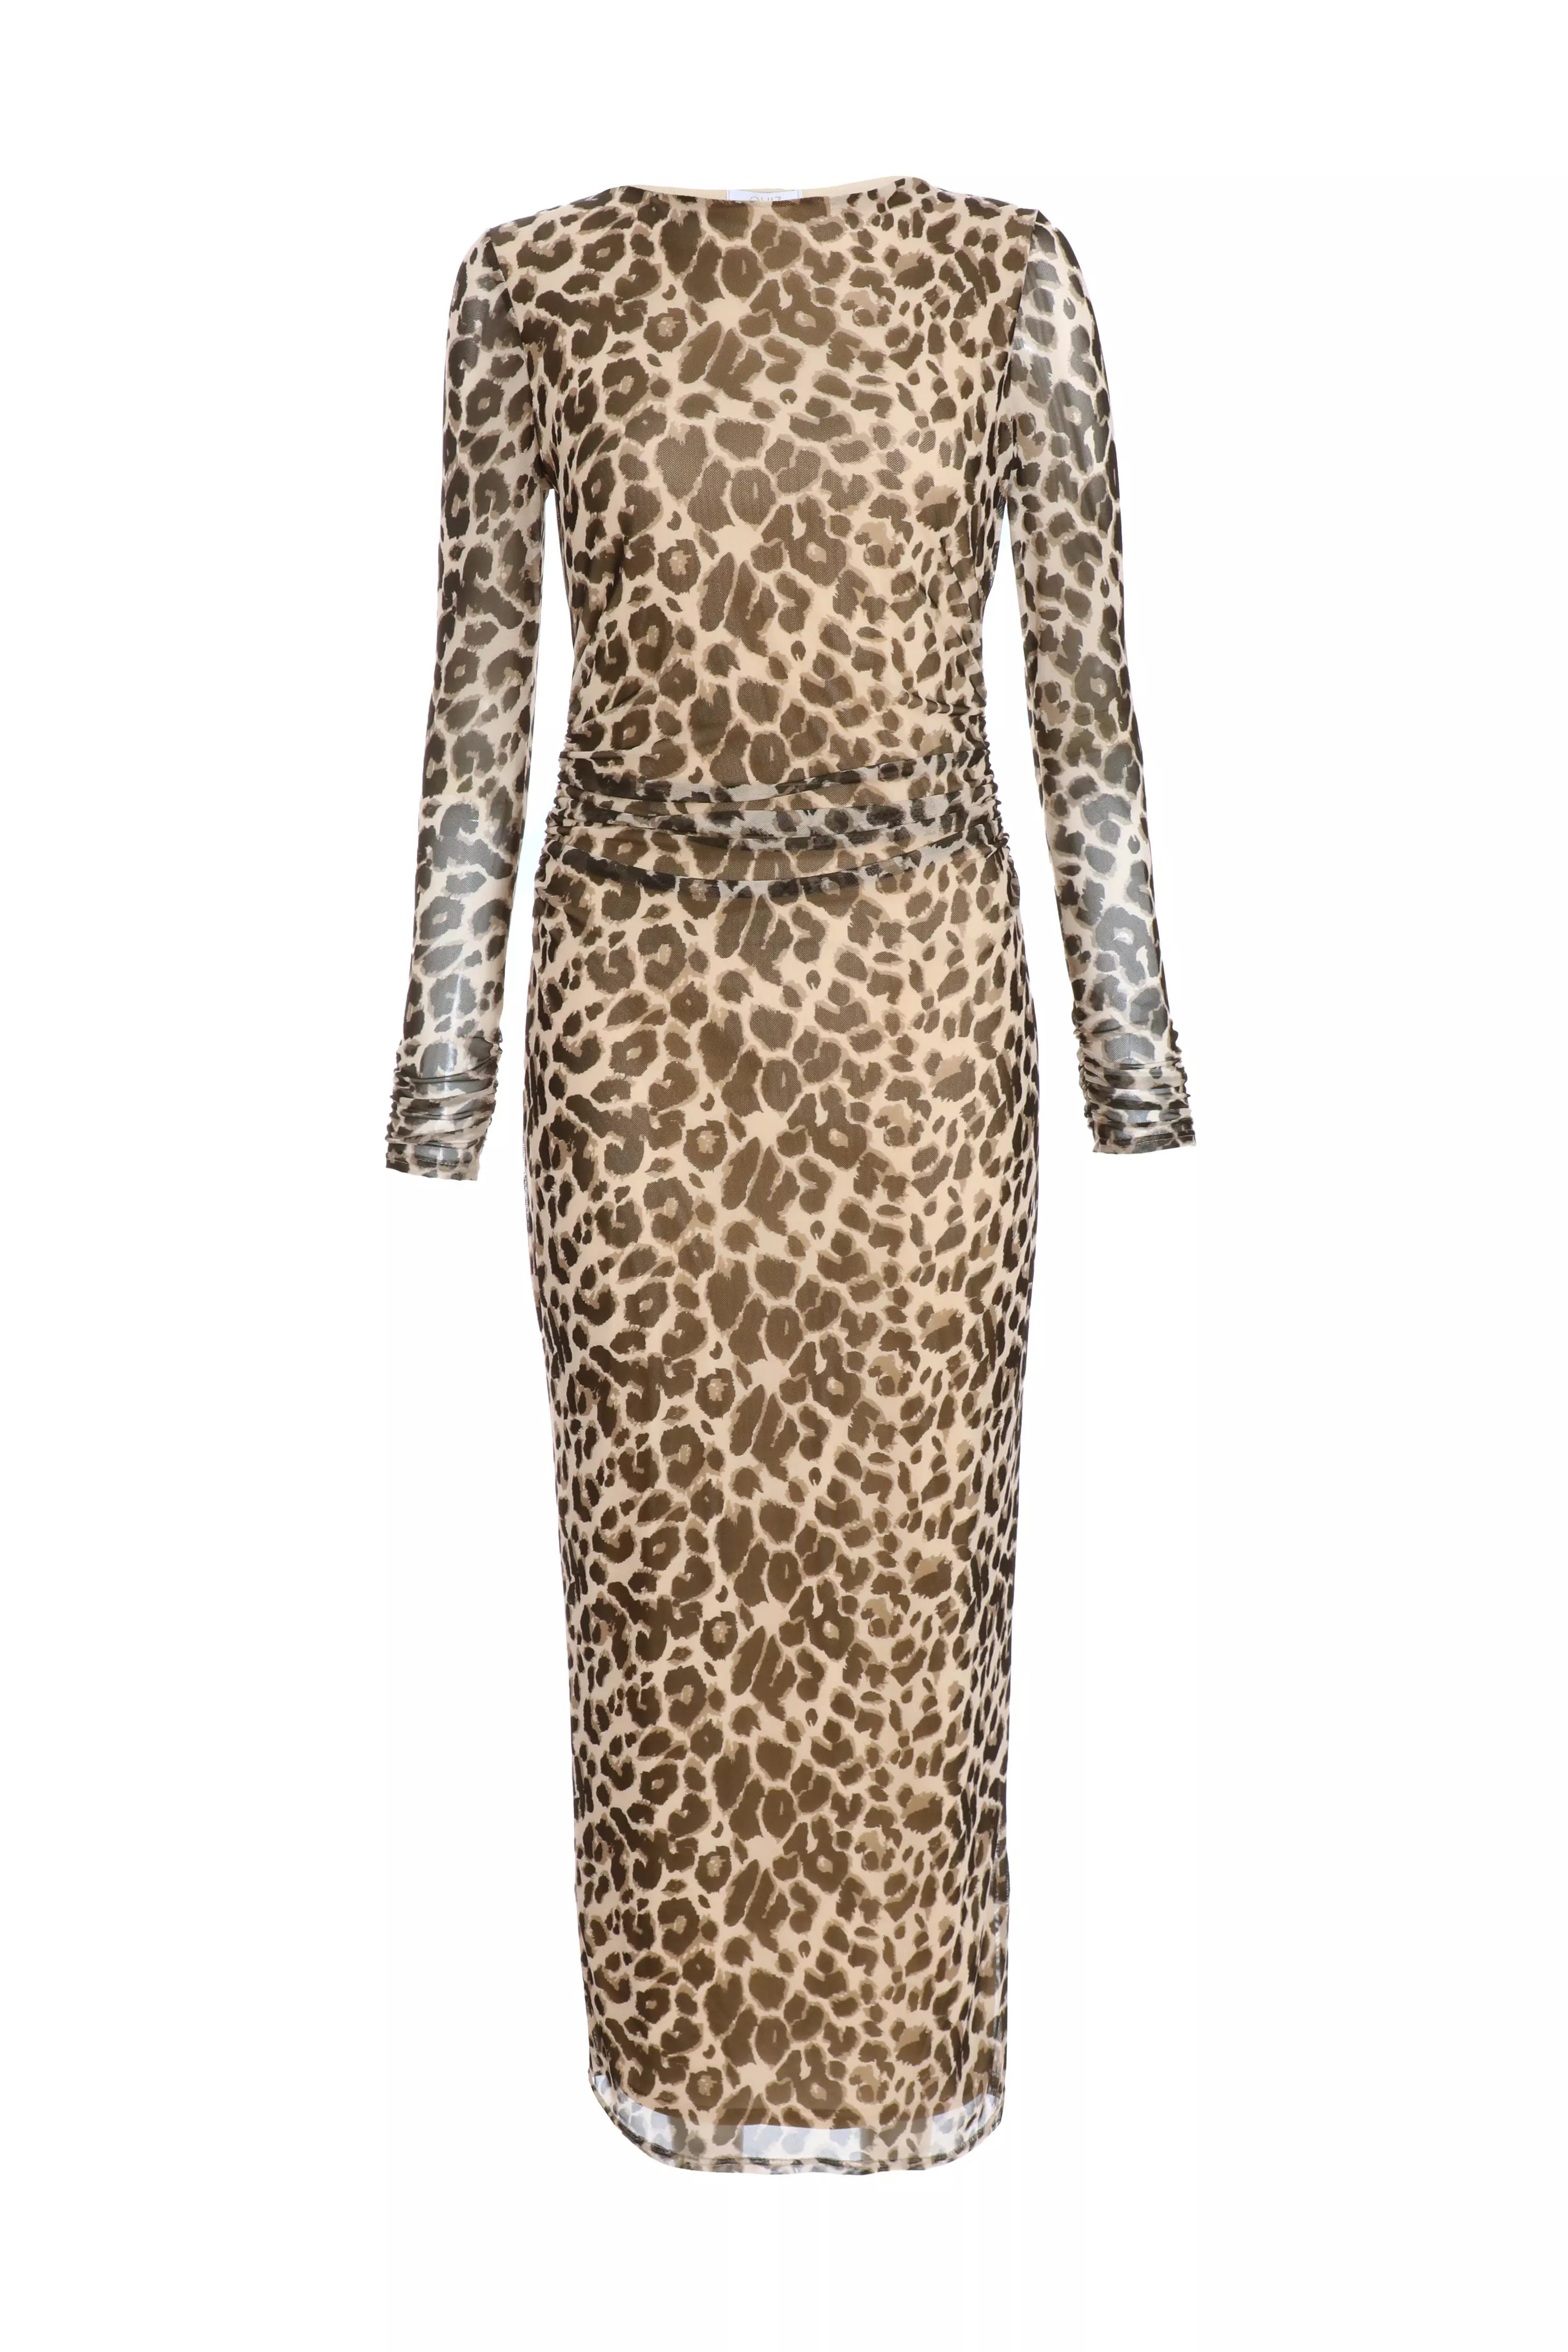 Stone Leopard Print Long Sleeve Mesh Midaxi Dress